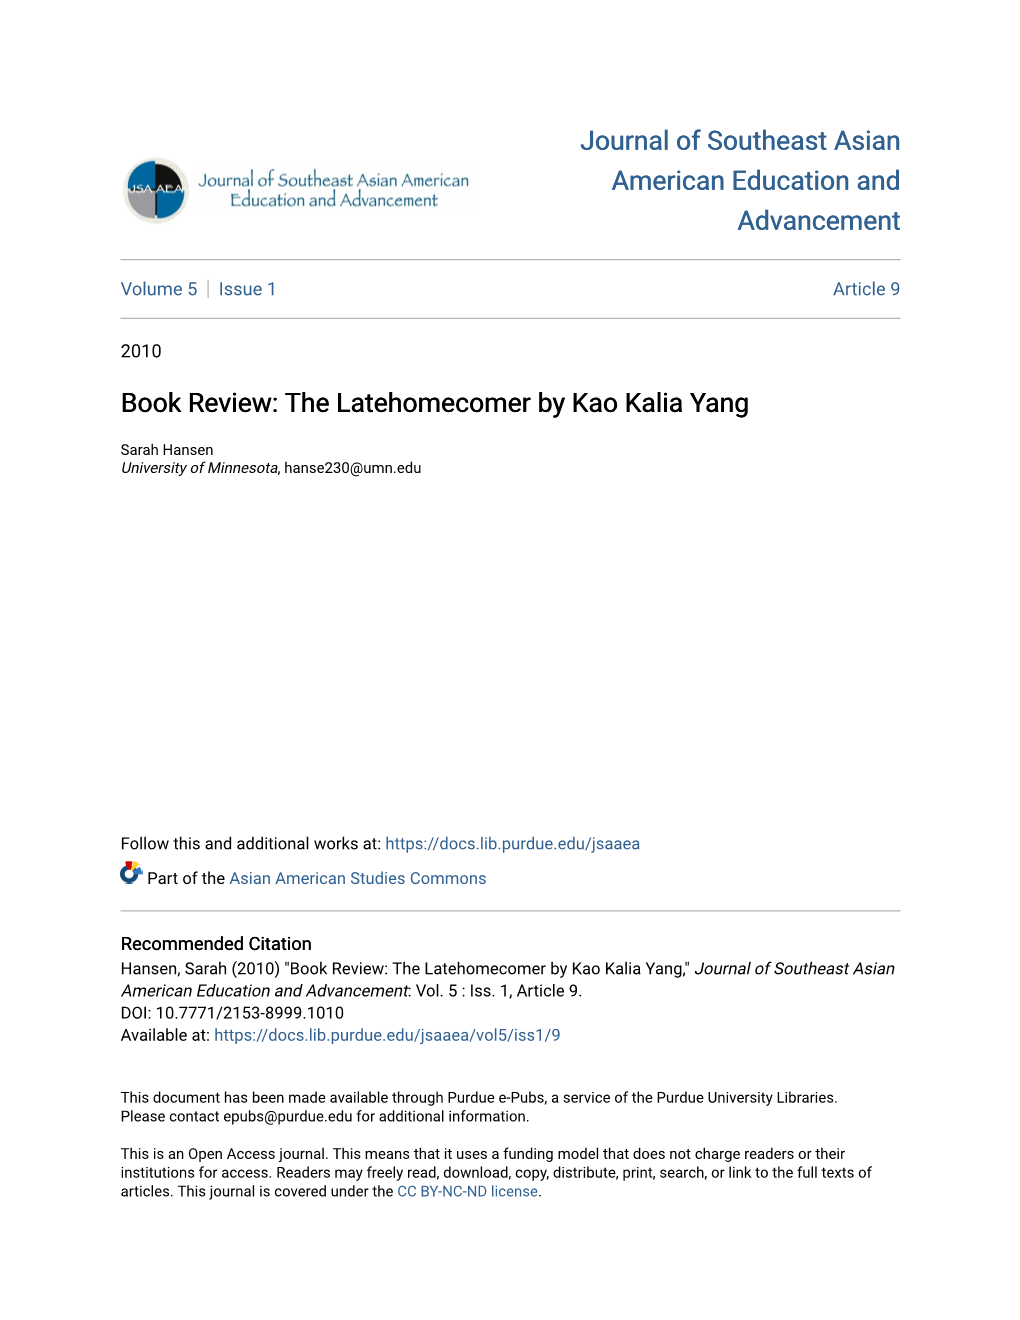 The Latehomecomer by Kao Kalia Yang